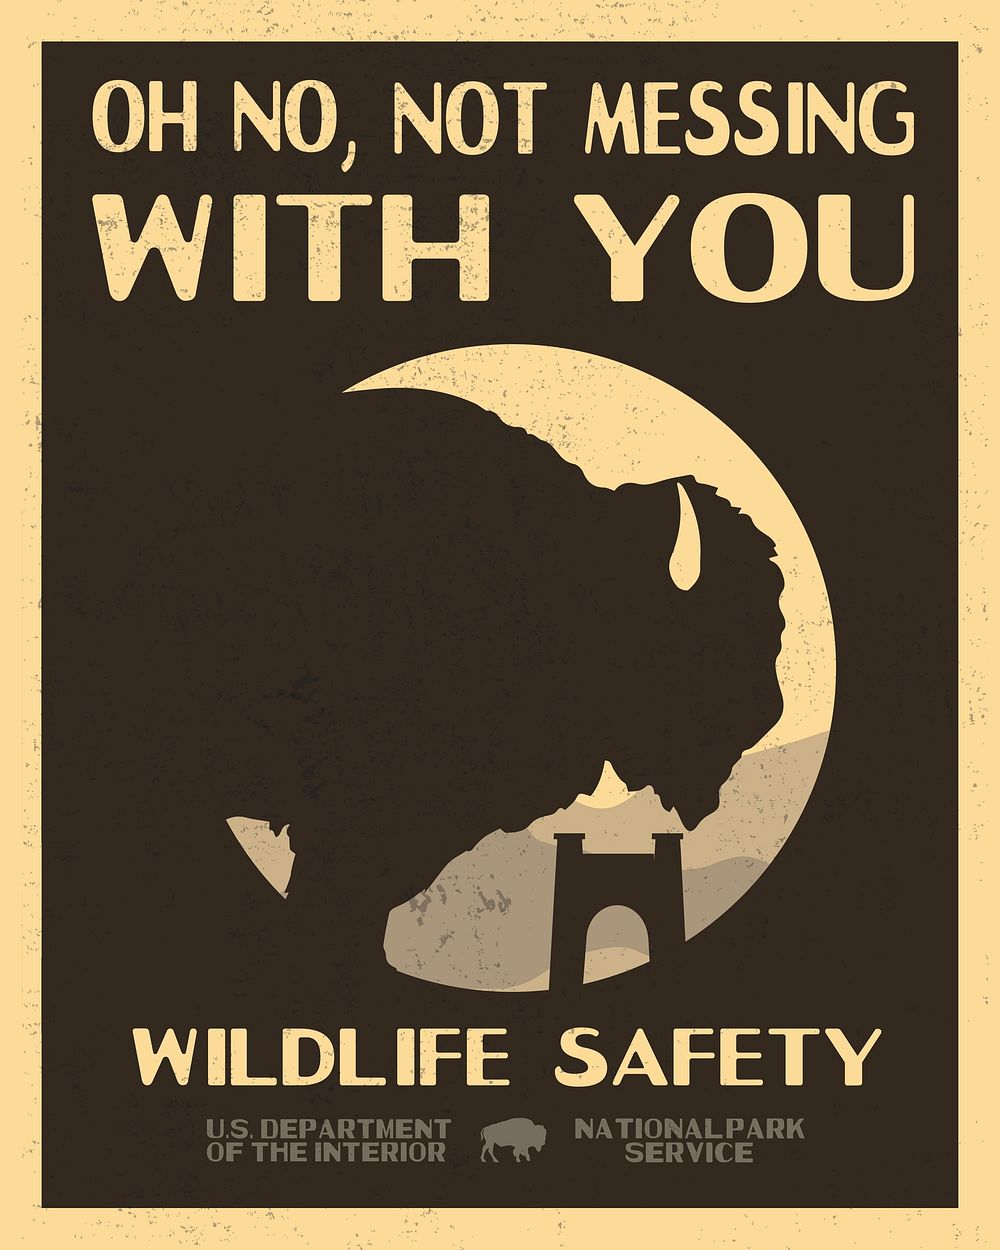 Wildlife Safety poster inspired by Deion Broxton by Matt Turner. Original public domain image from Flickr